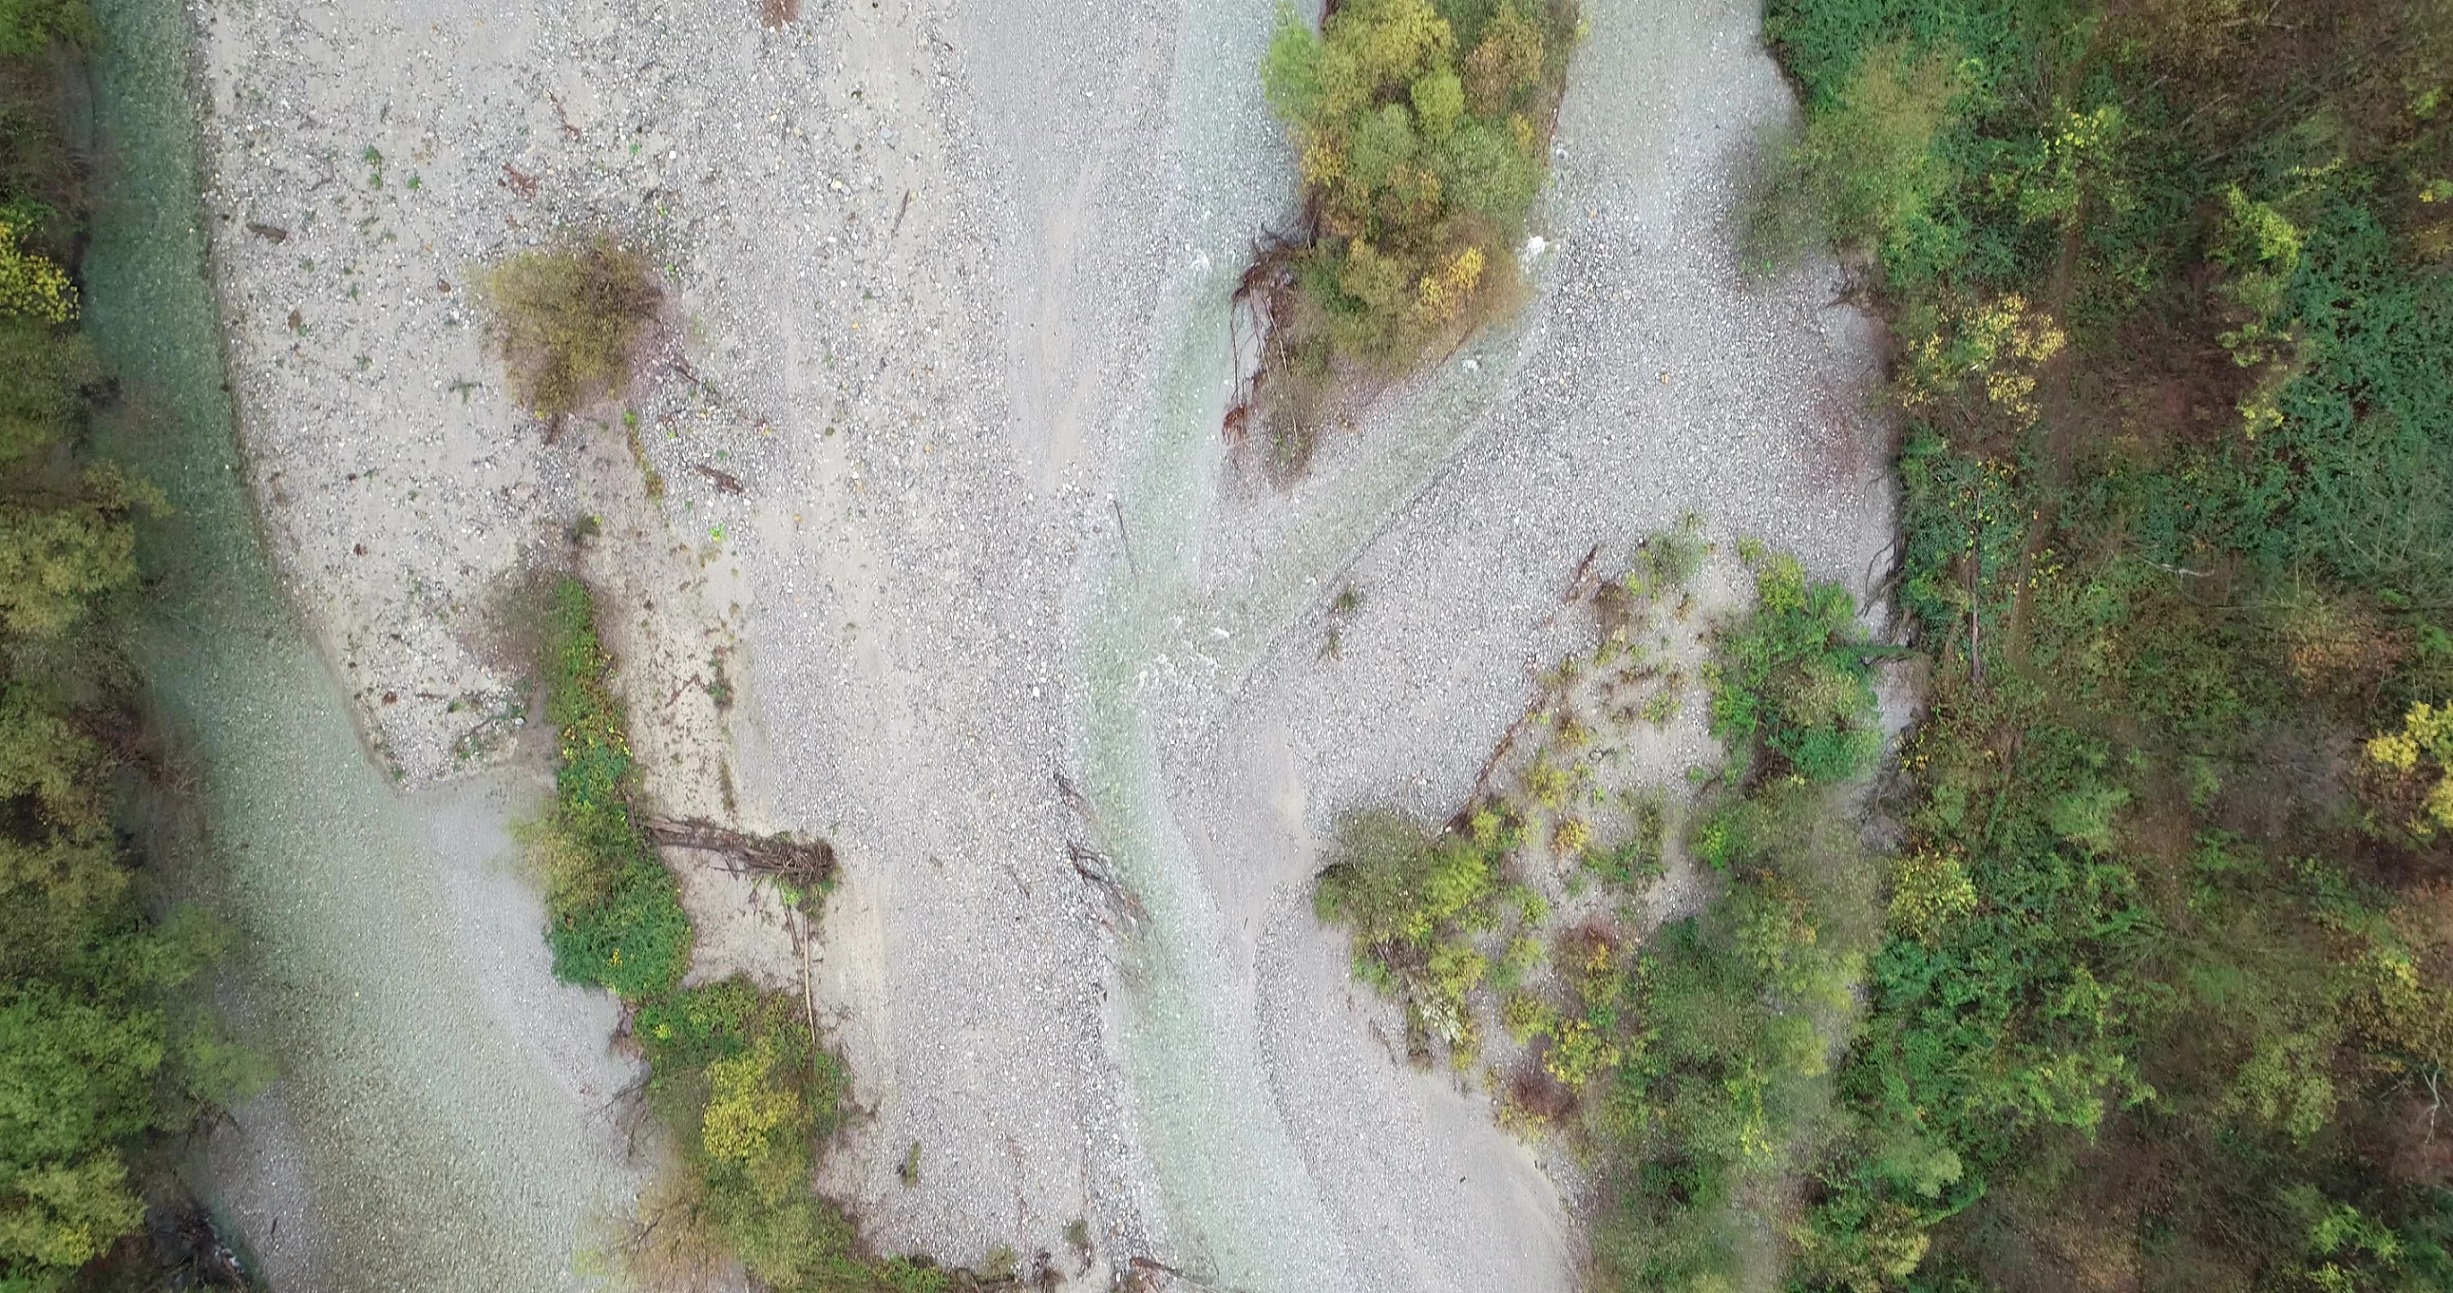 Deposition of organic materials and wood on an alpine river floodplain, Moesa river, Switzerland